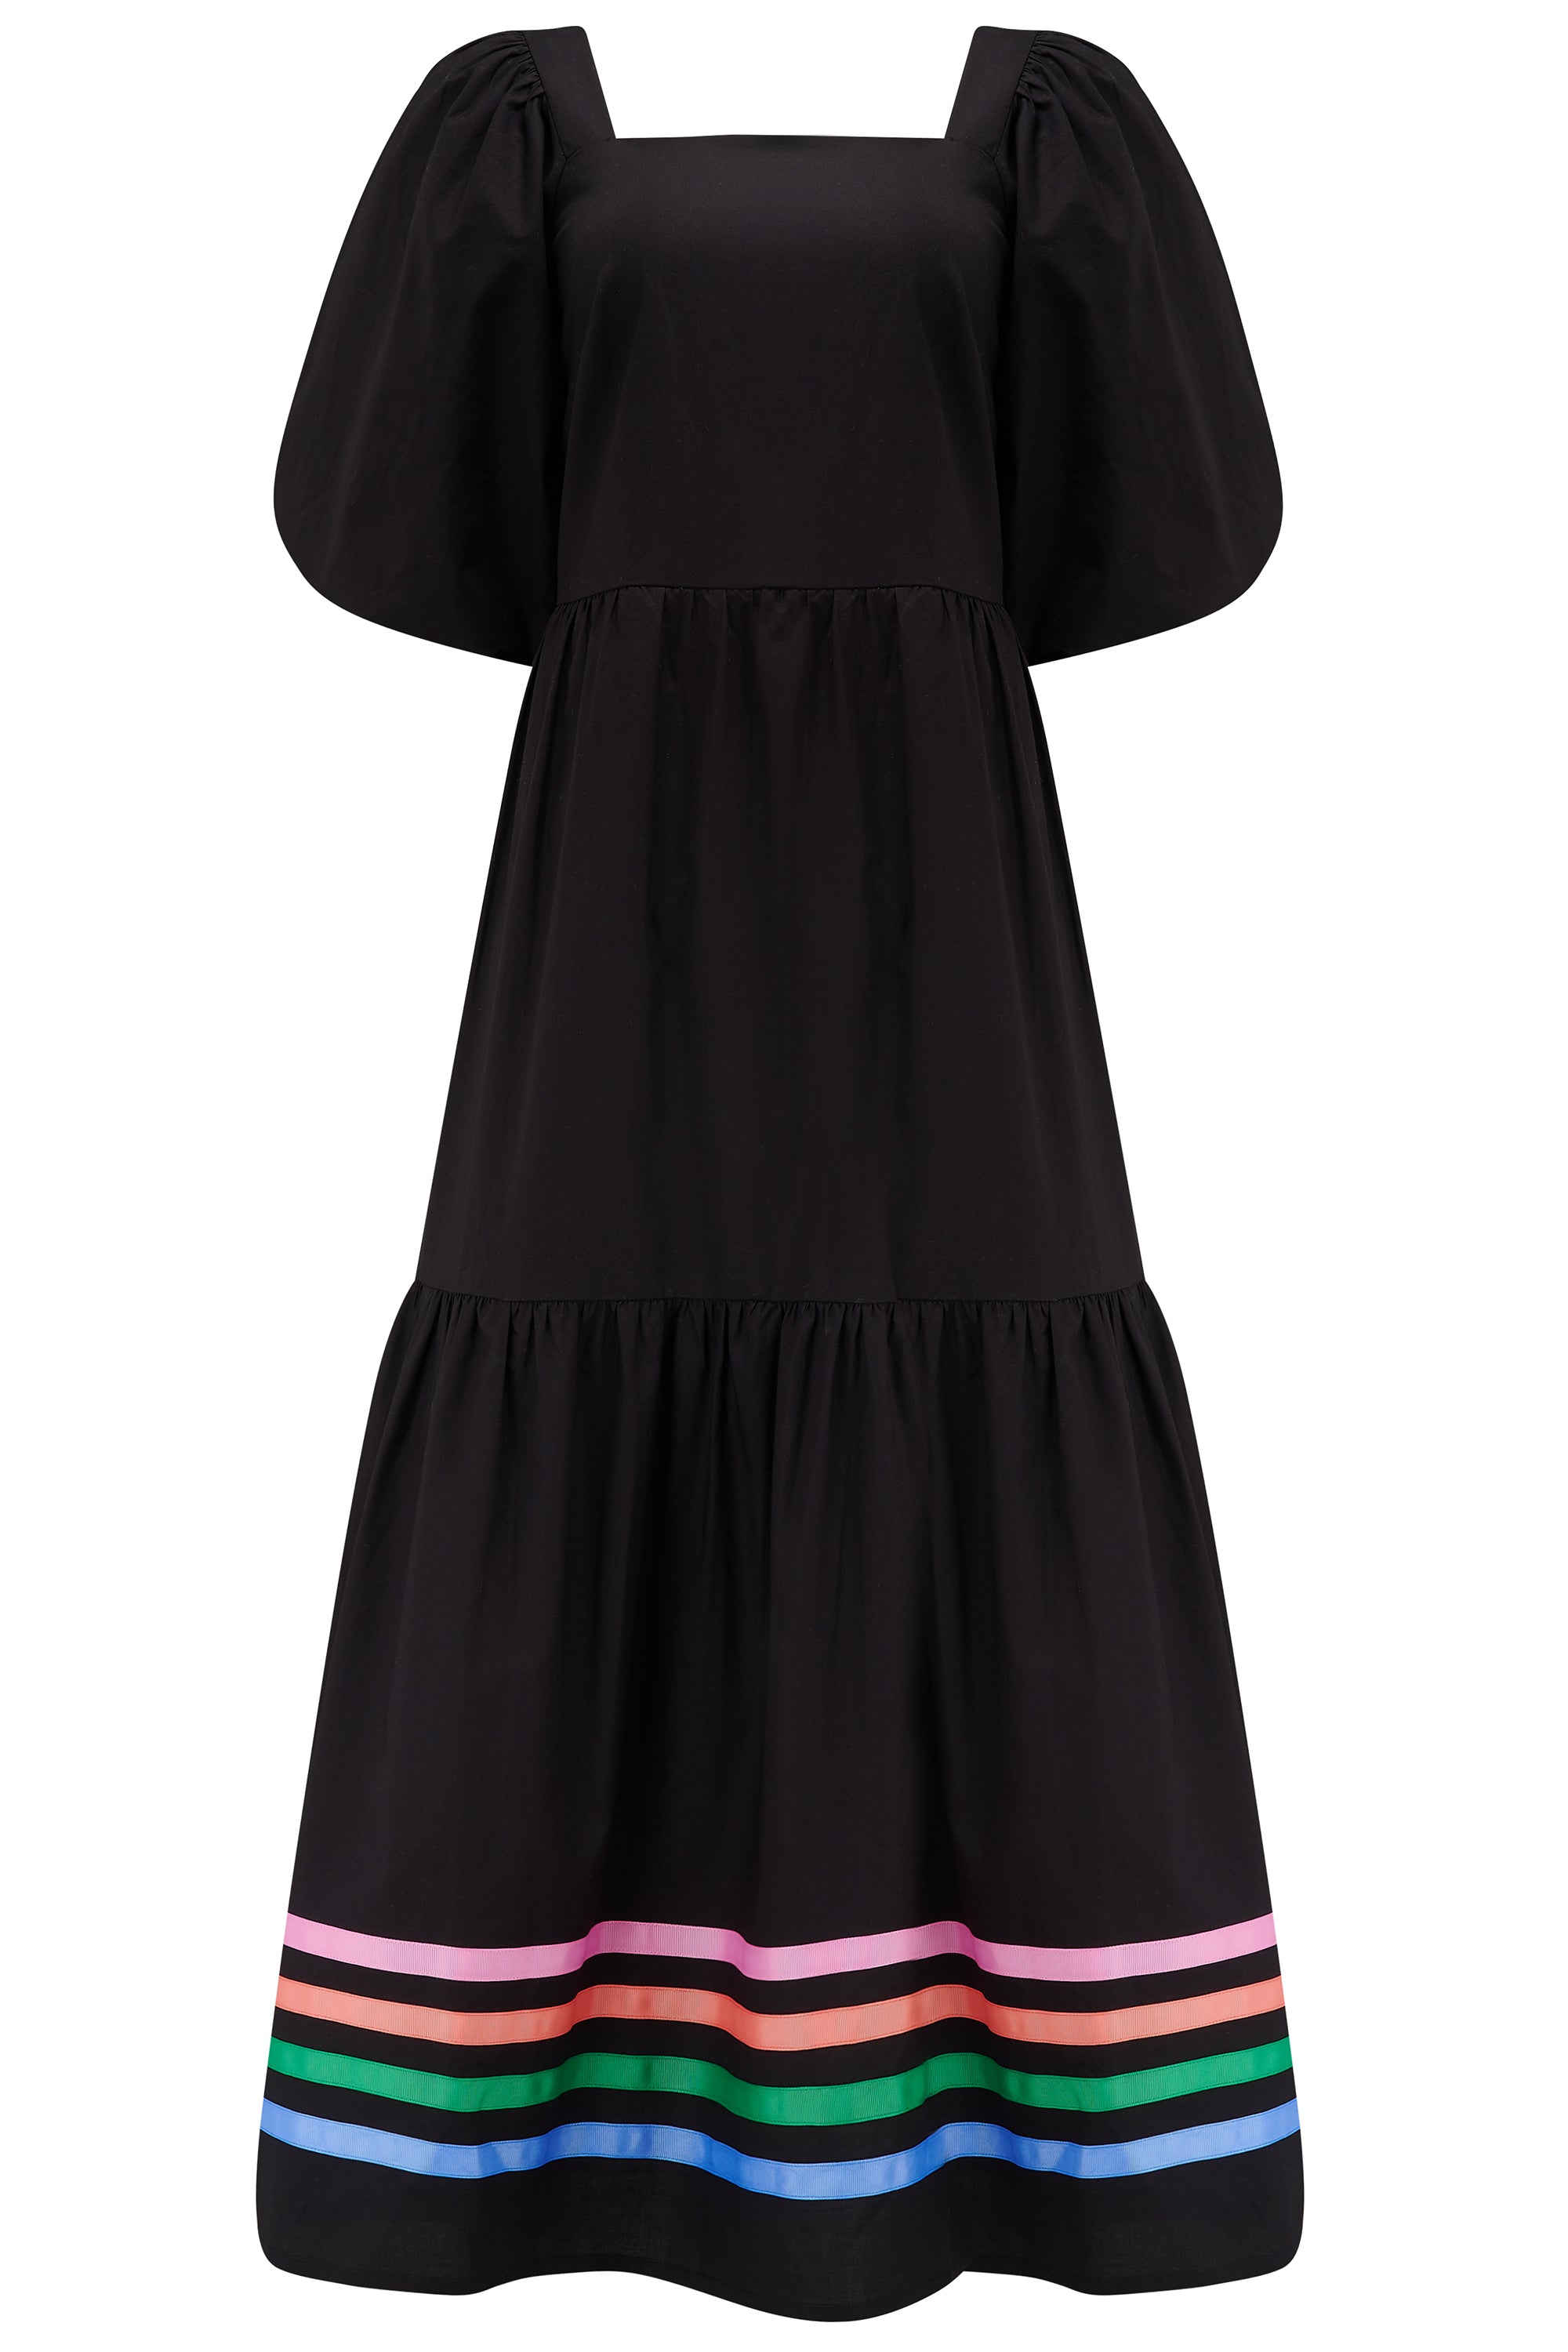 Women’s Frankie Midi Smock Dress Black, Rainbow Stripes Extra Small Sugarhill Brighton